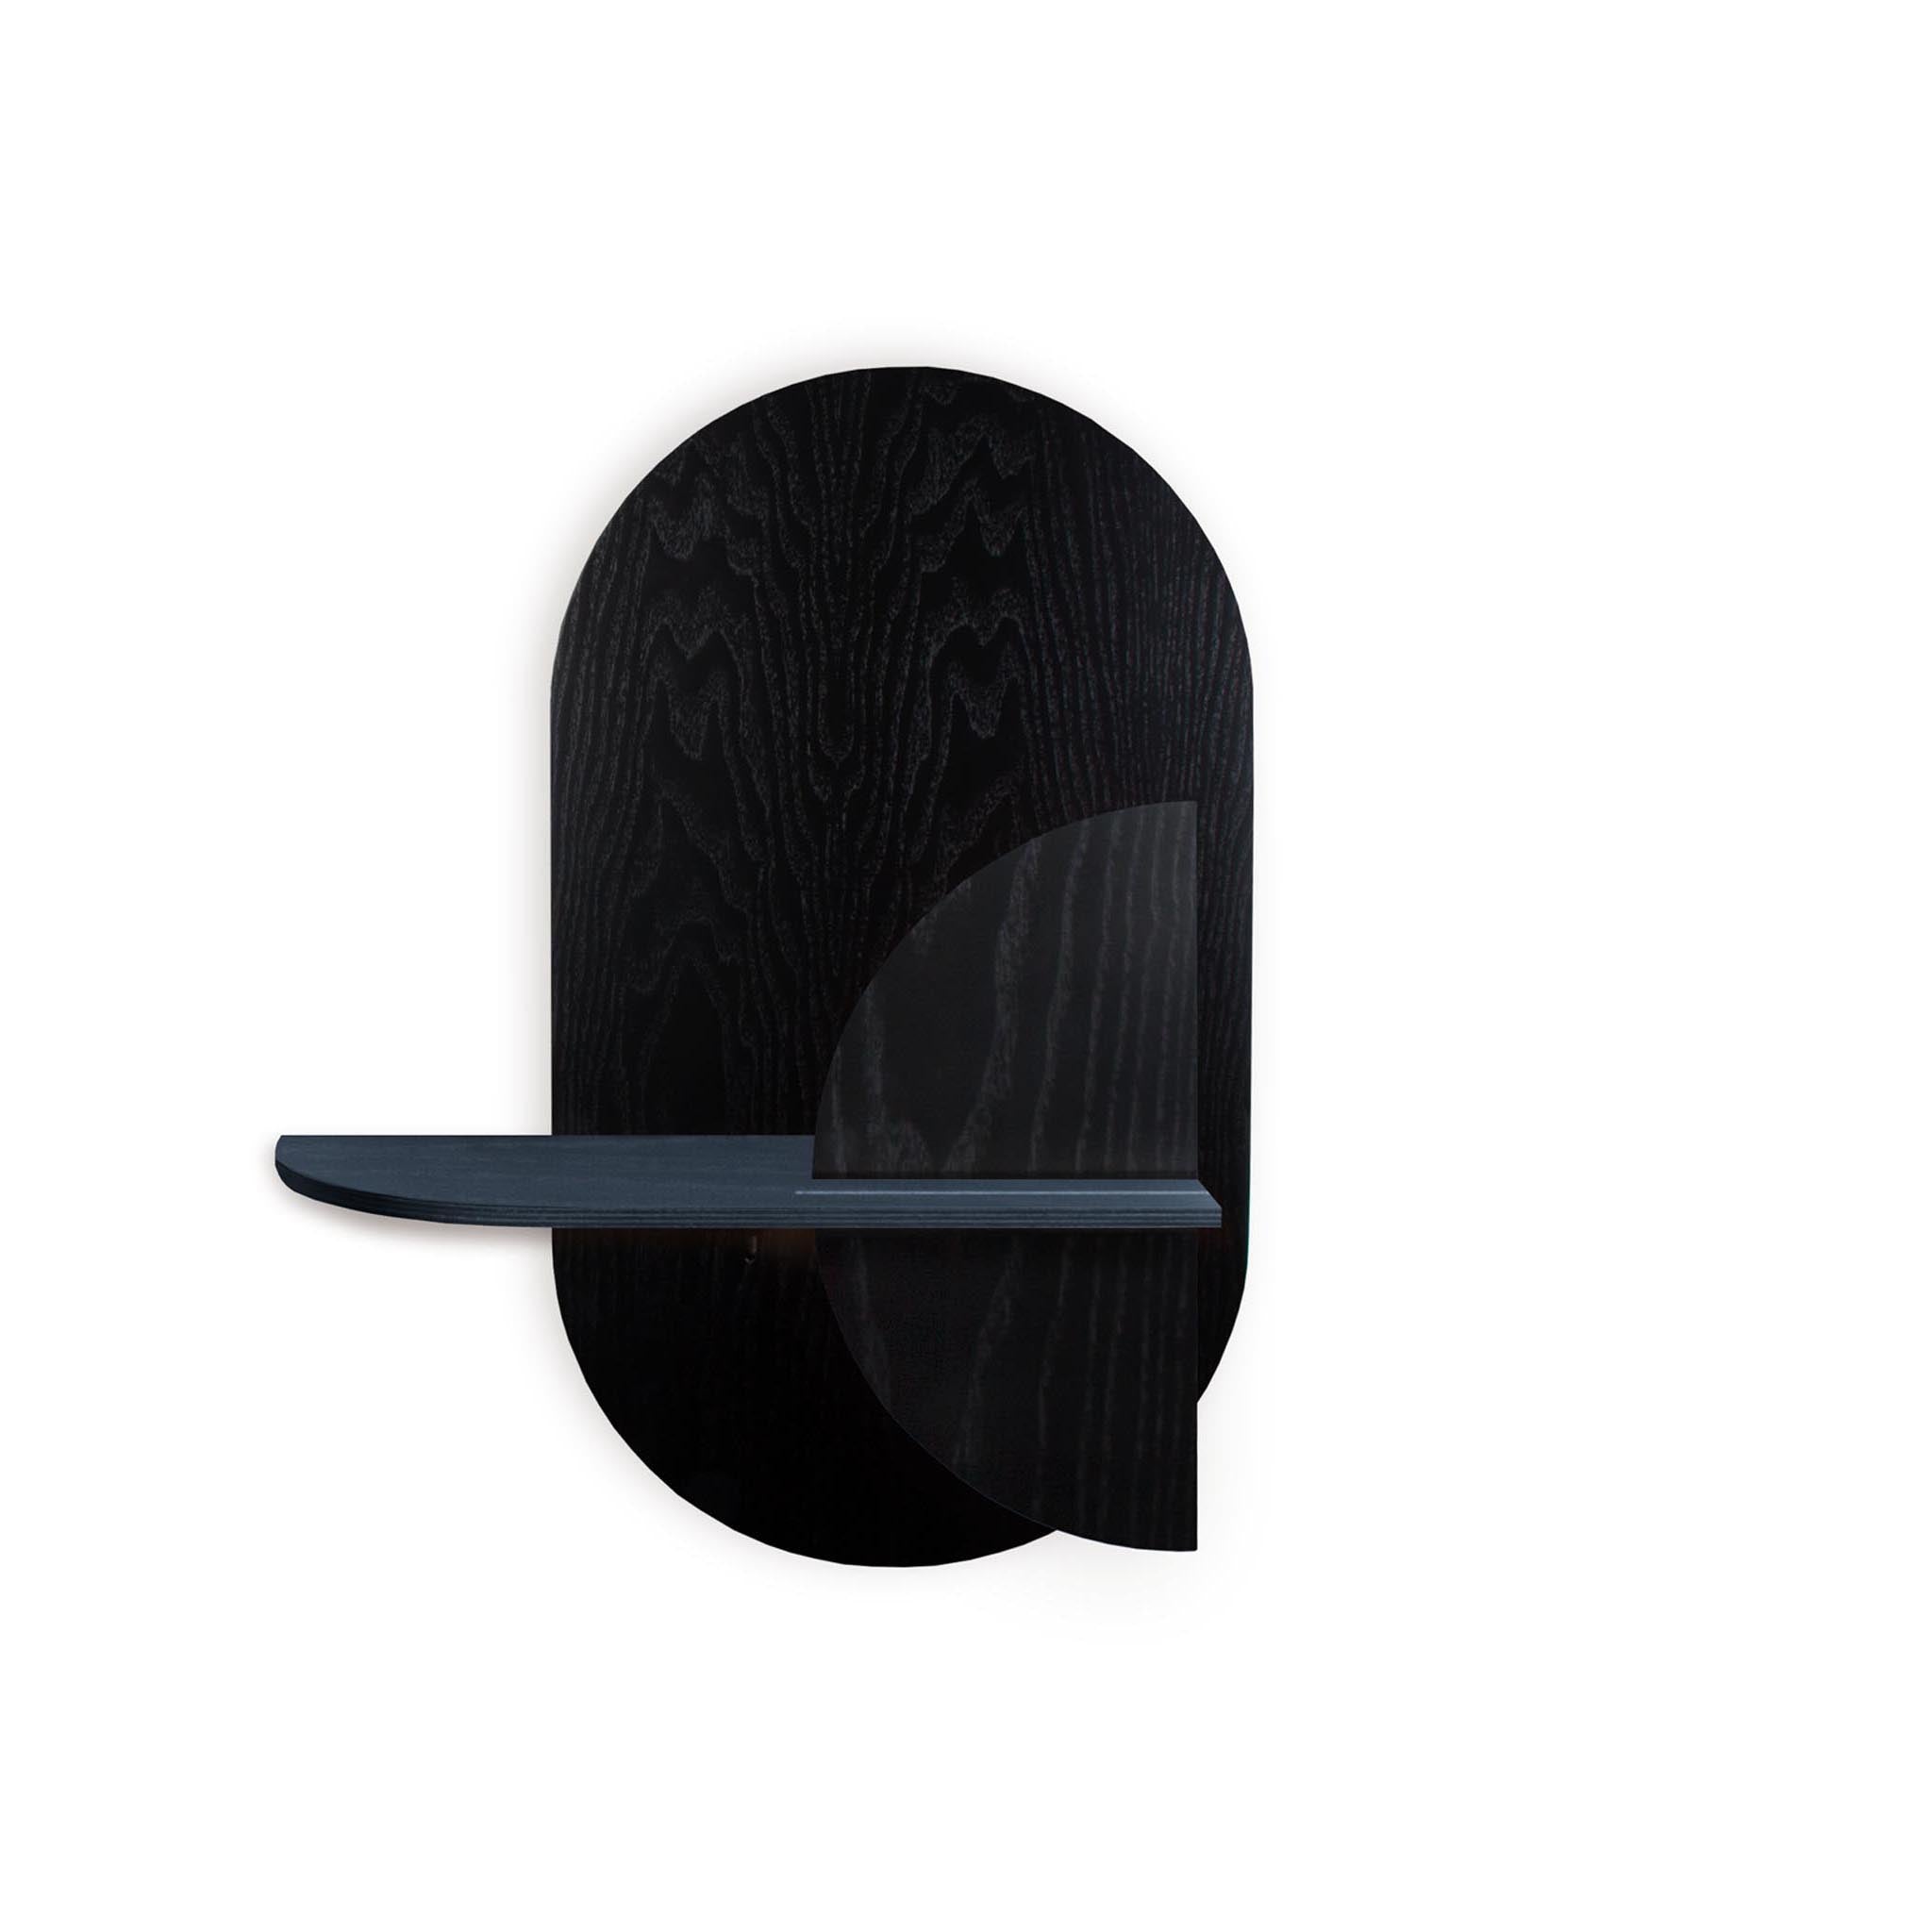 Alba wall shelf DUO · Black oval